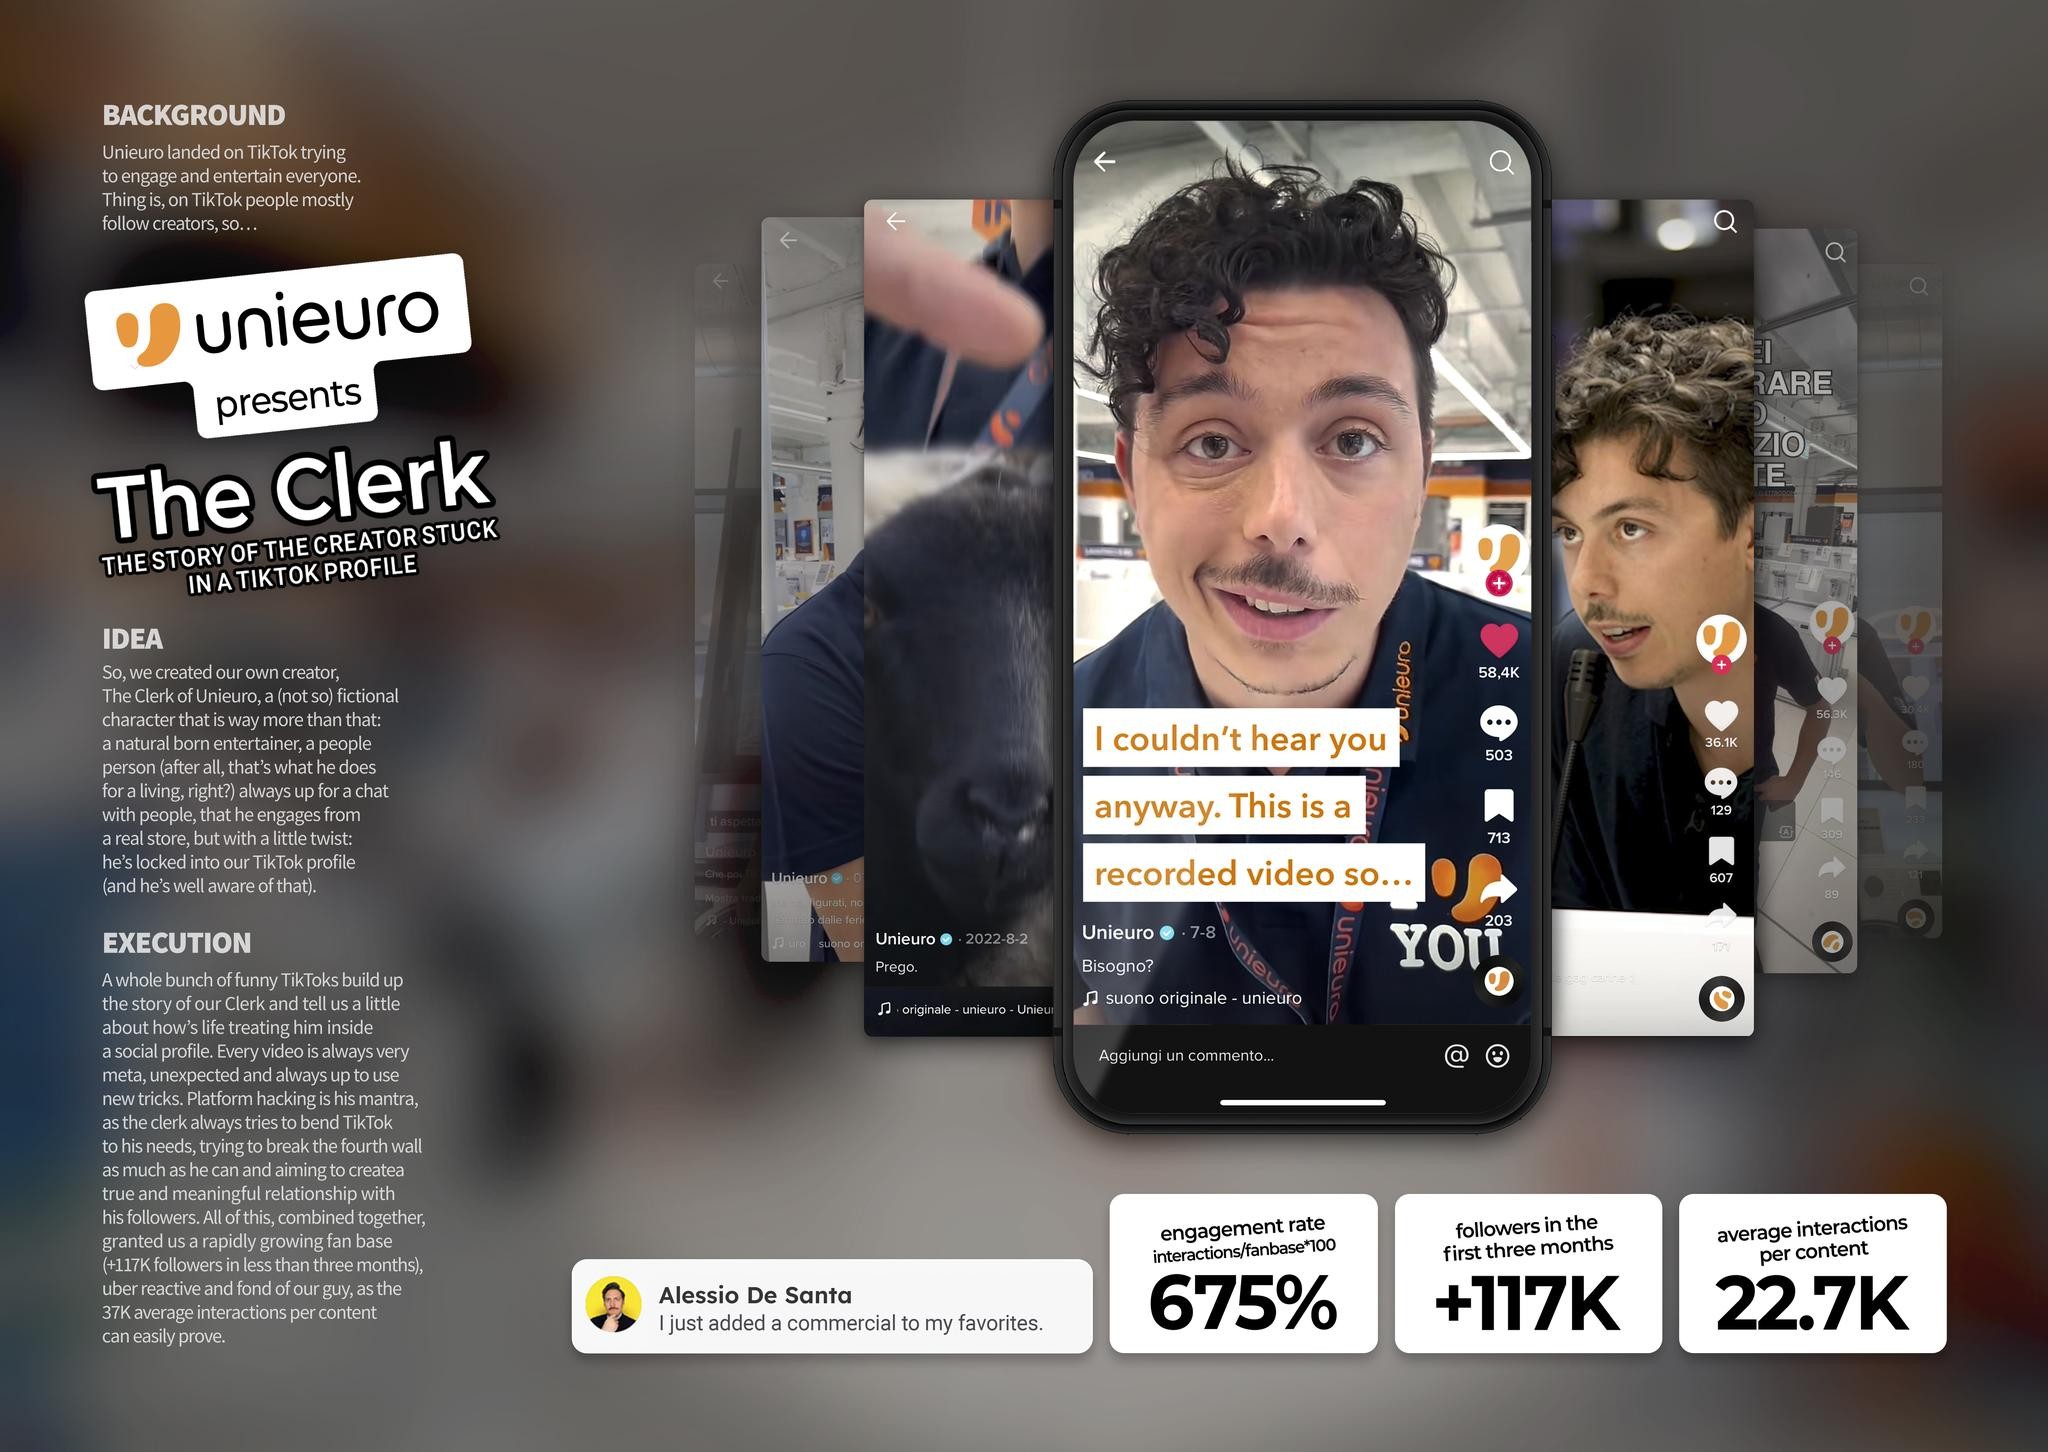 Unieuro - The Clerk